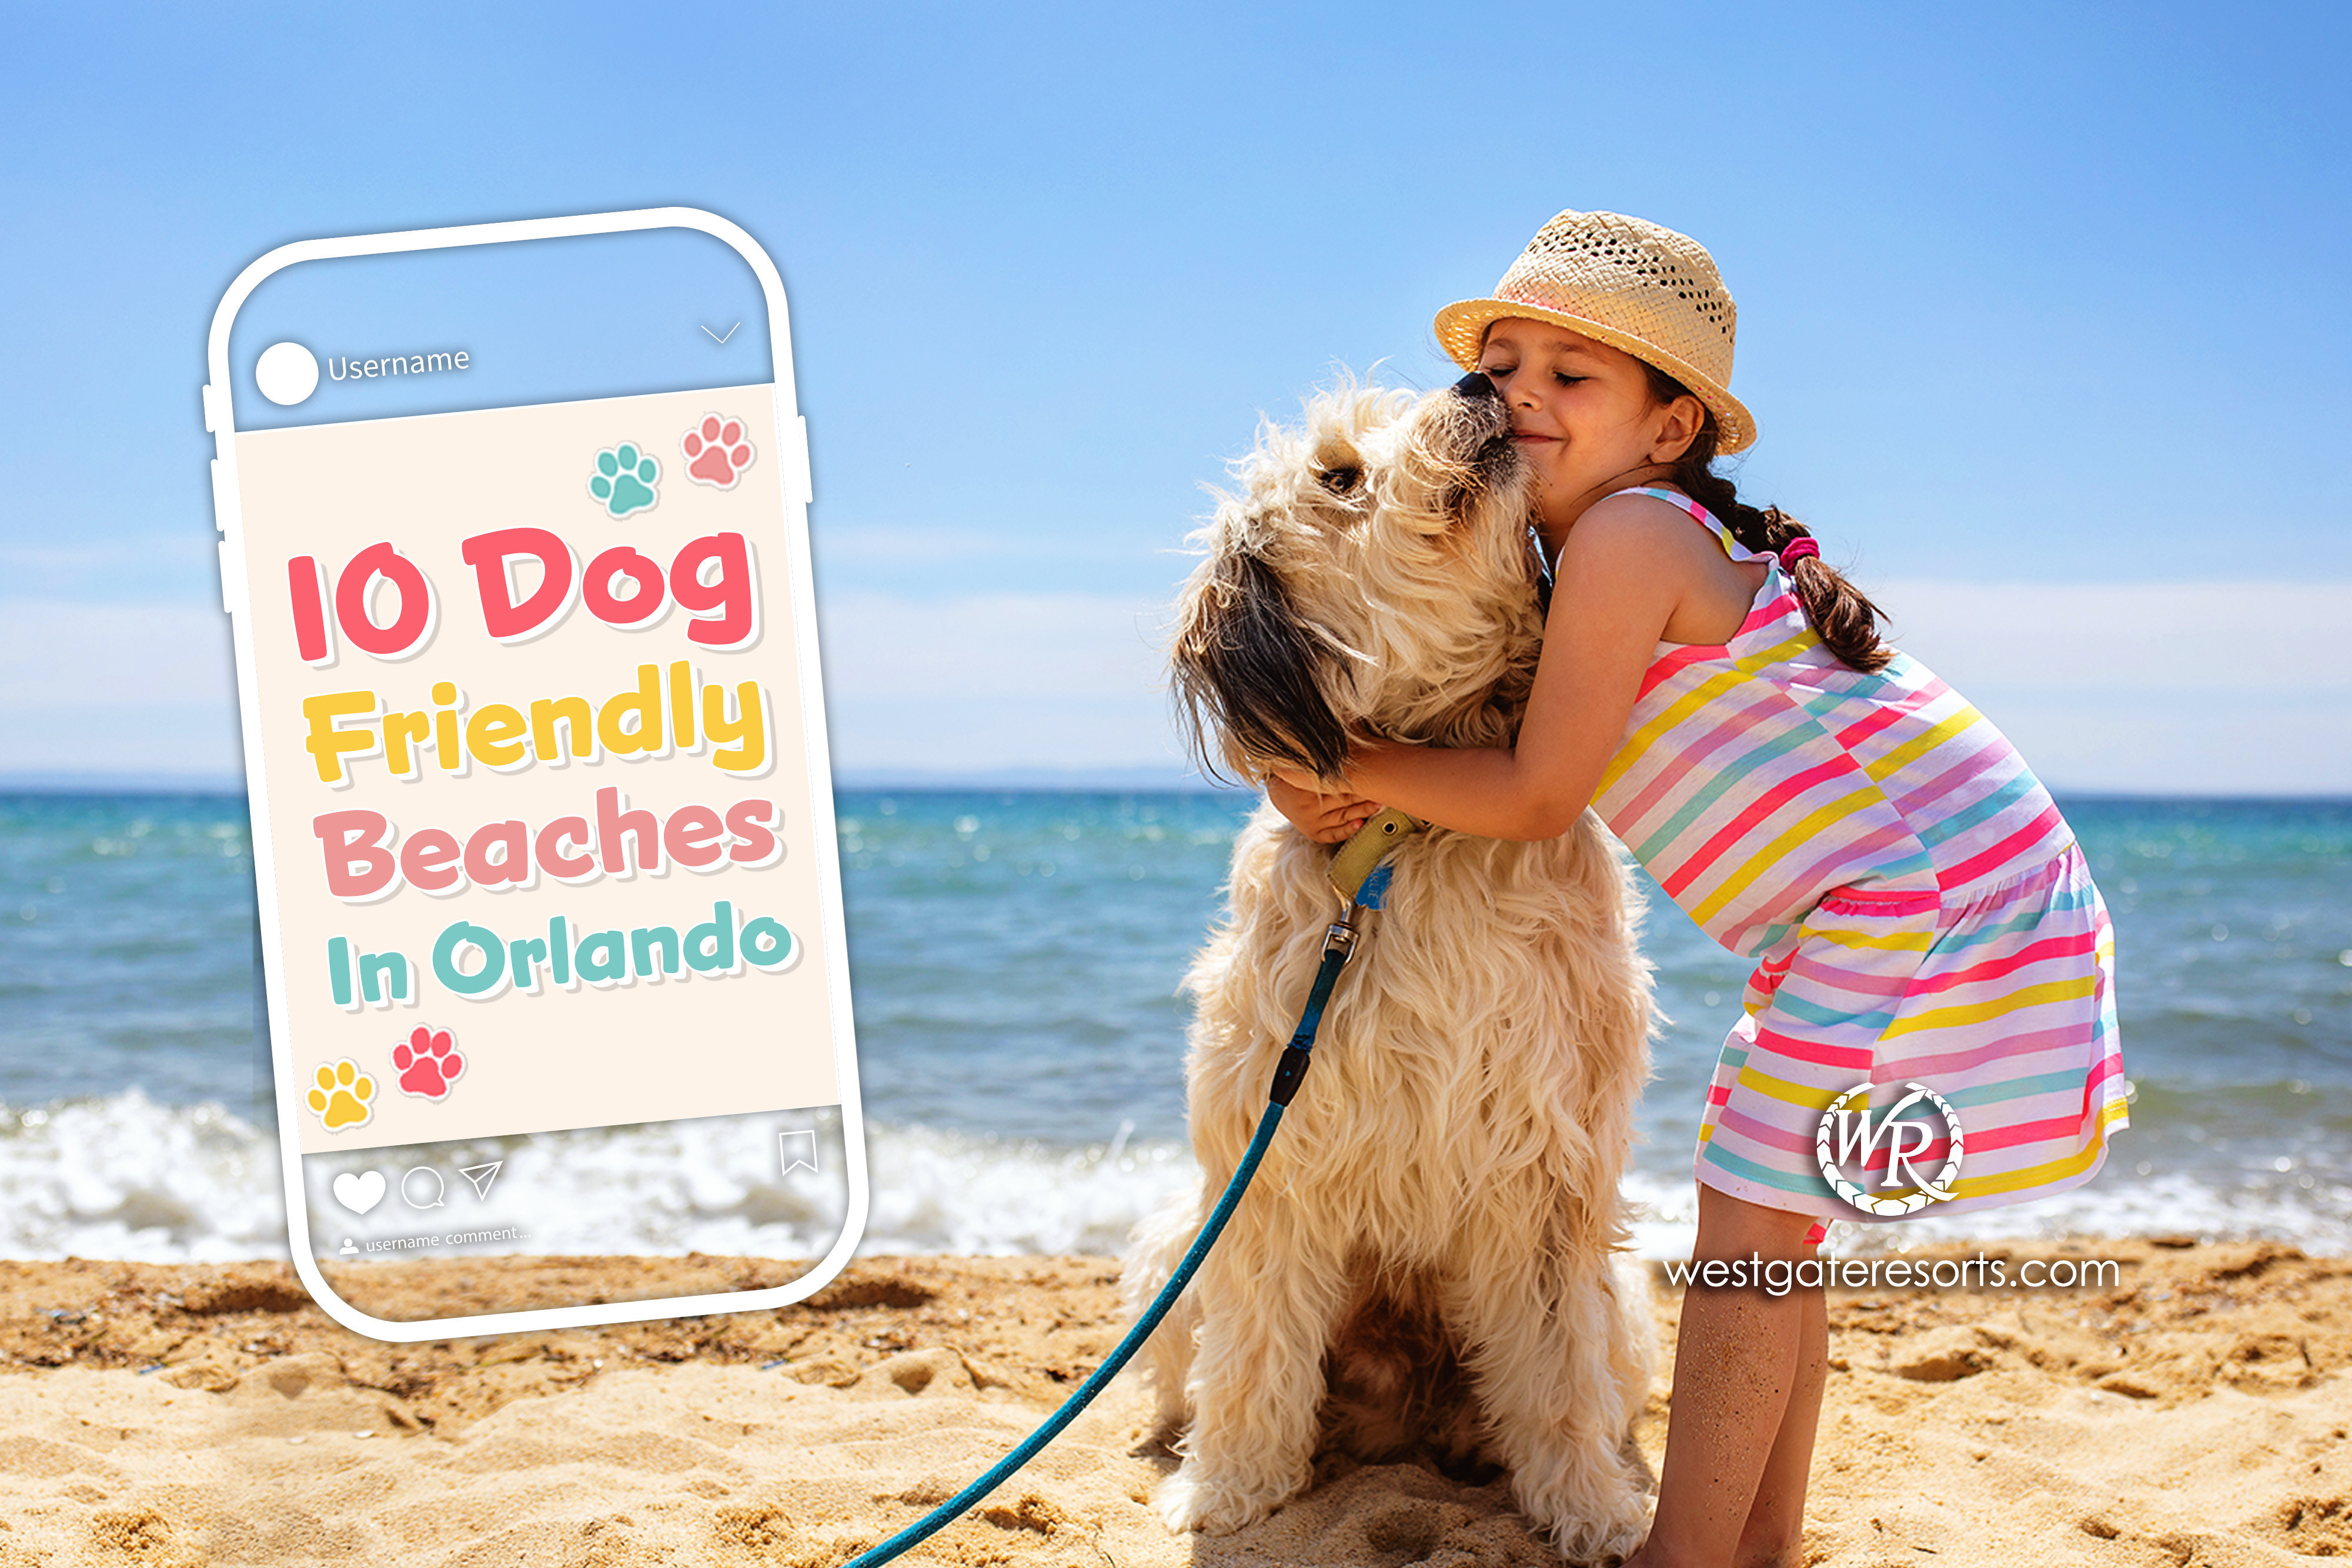 10 Dog Friendly Beaches Near Orlando